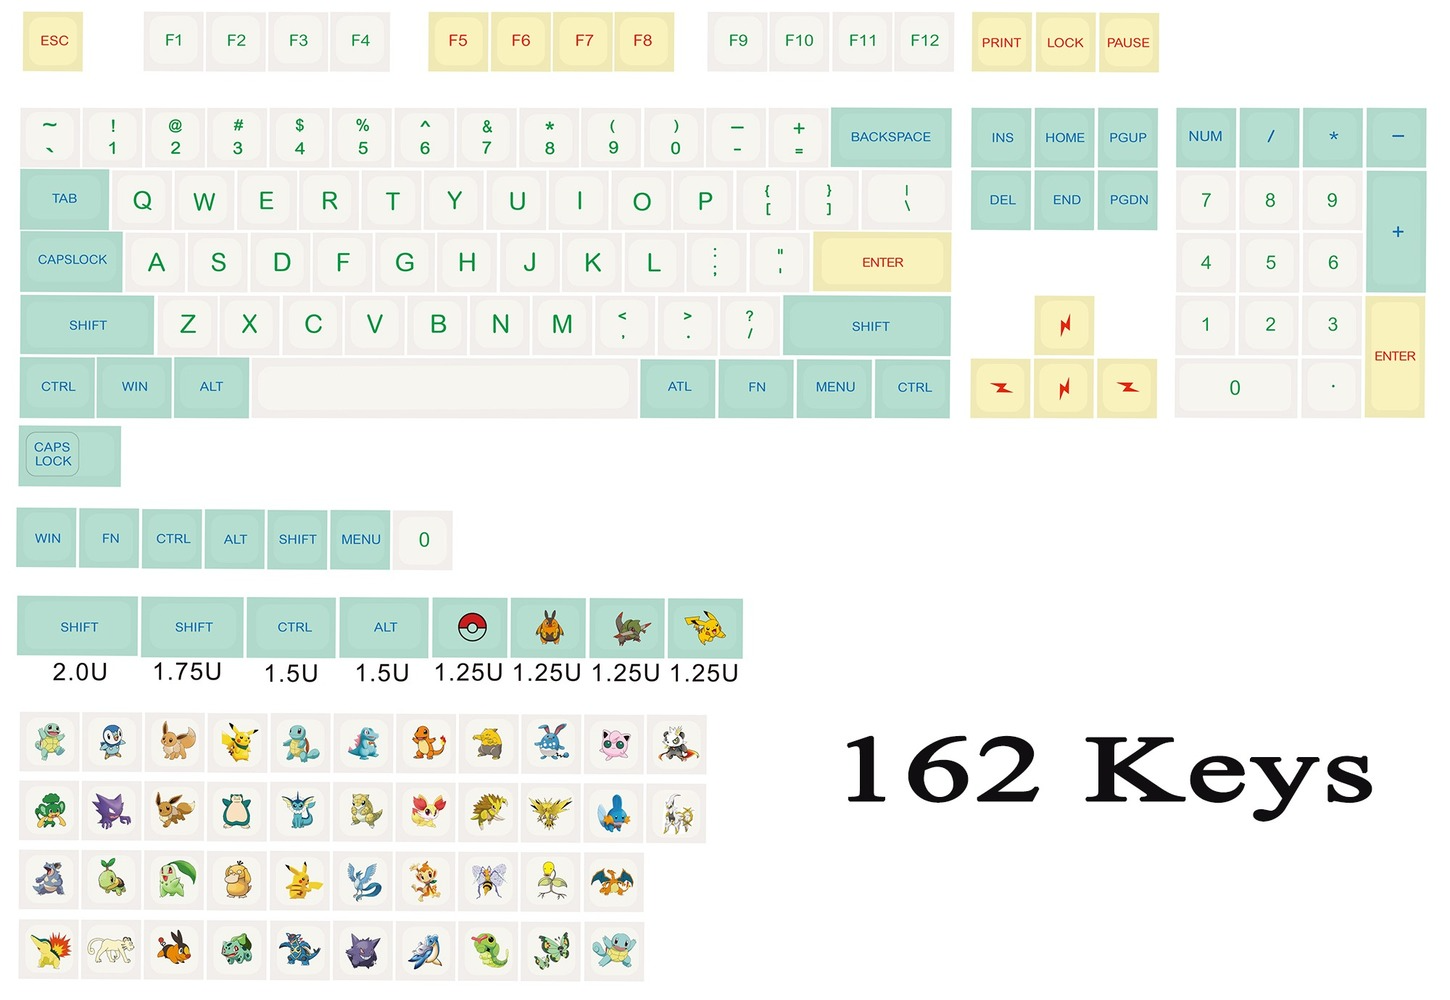 G-MKY Pokemon PBT XDAS Profile Keycaps